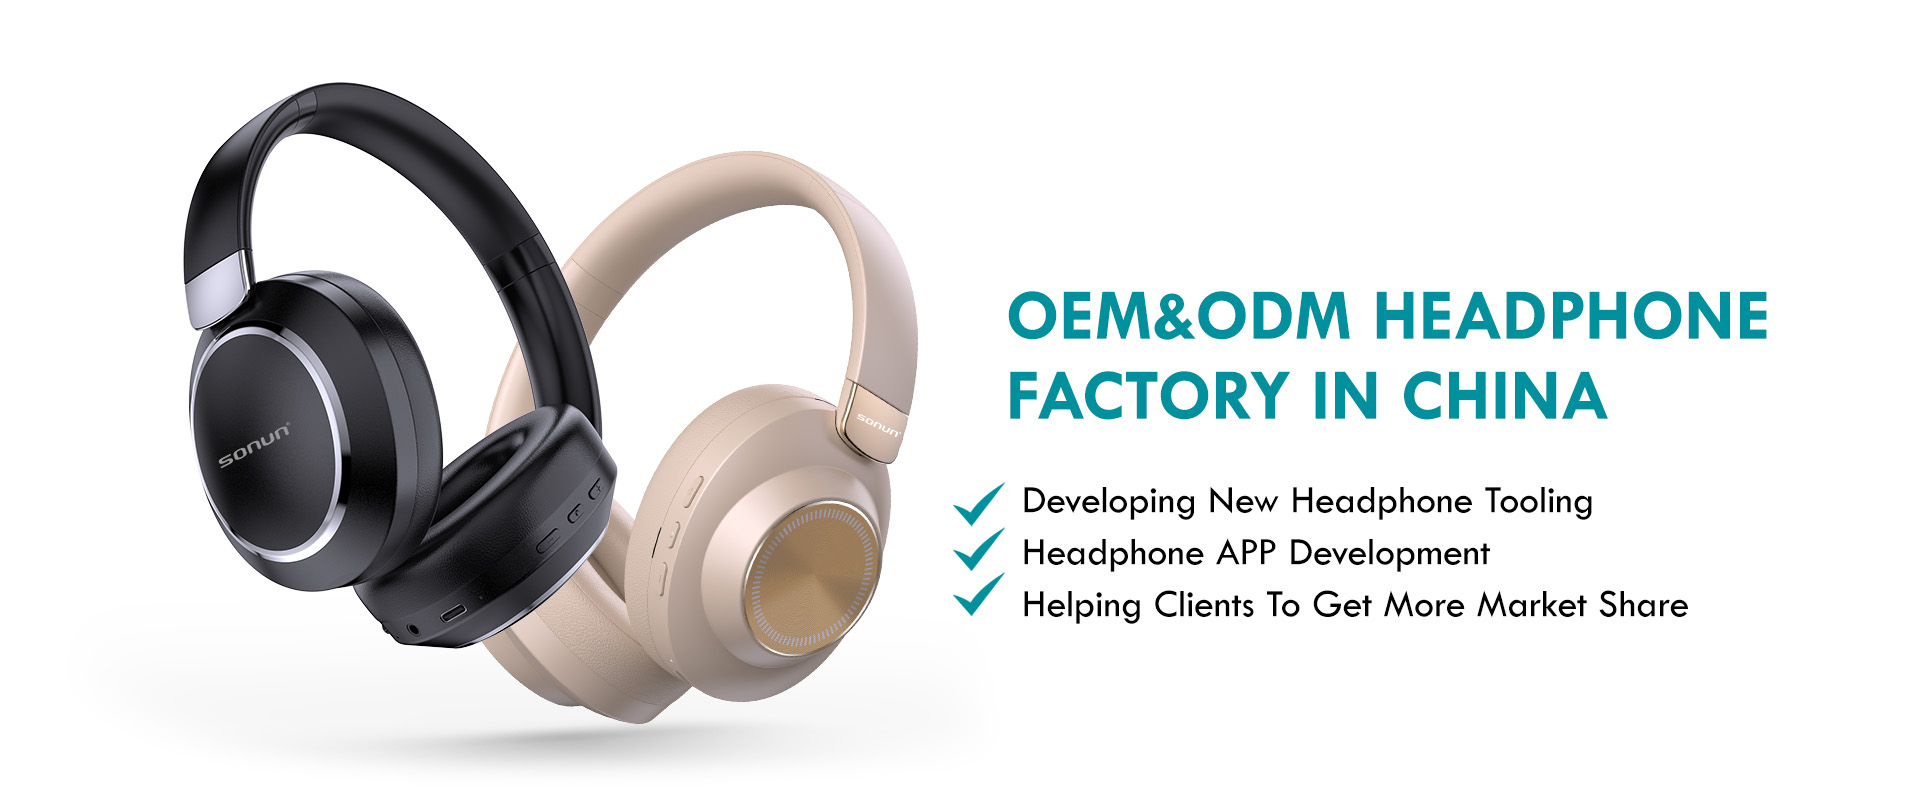 Sonun_OEM_ODM_Headphone_factory_in_China